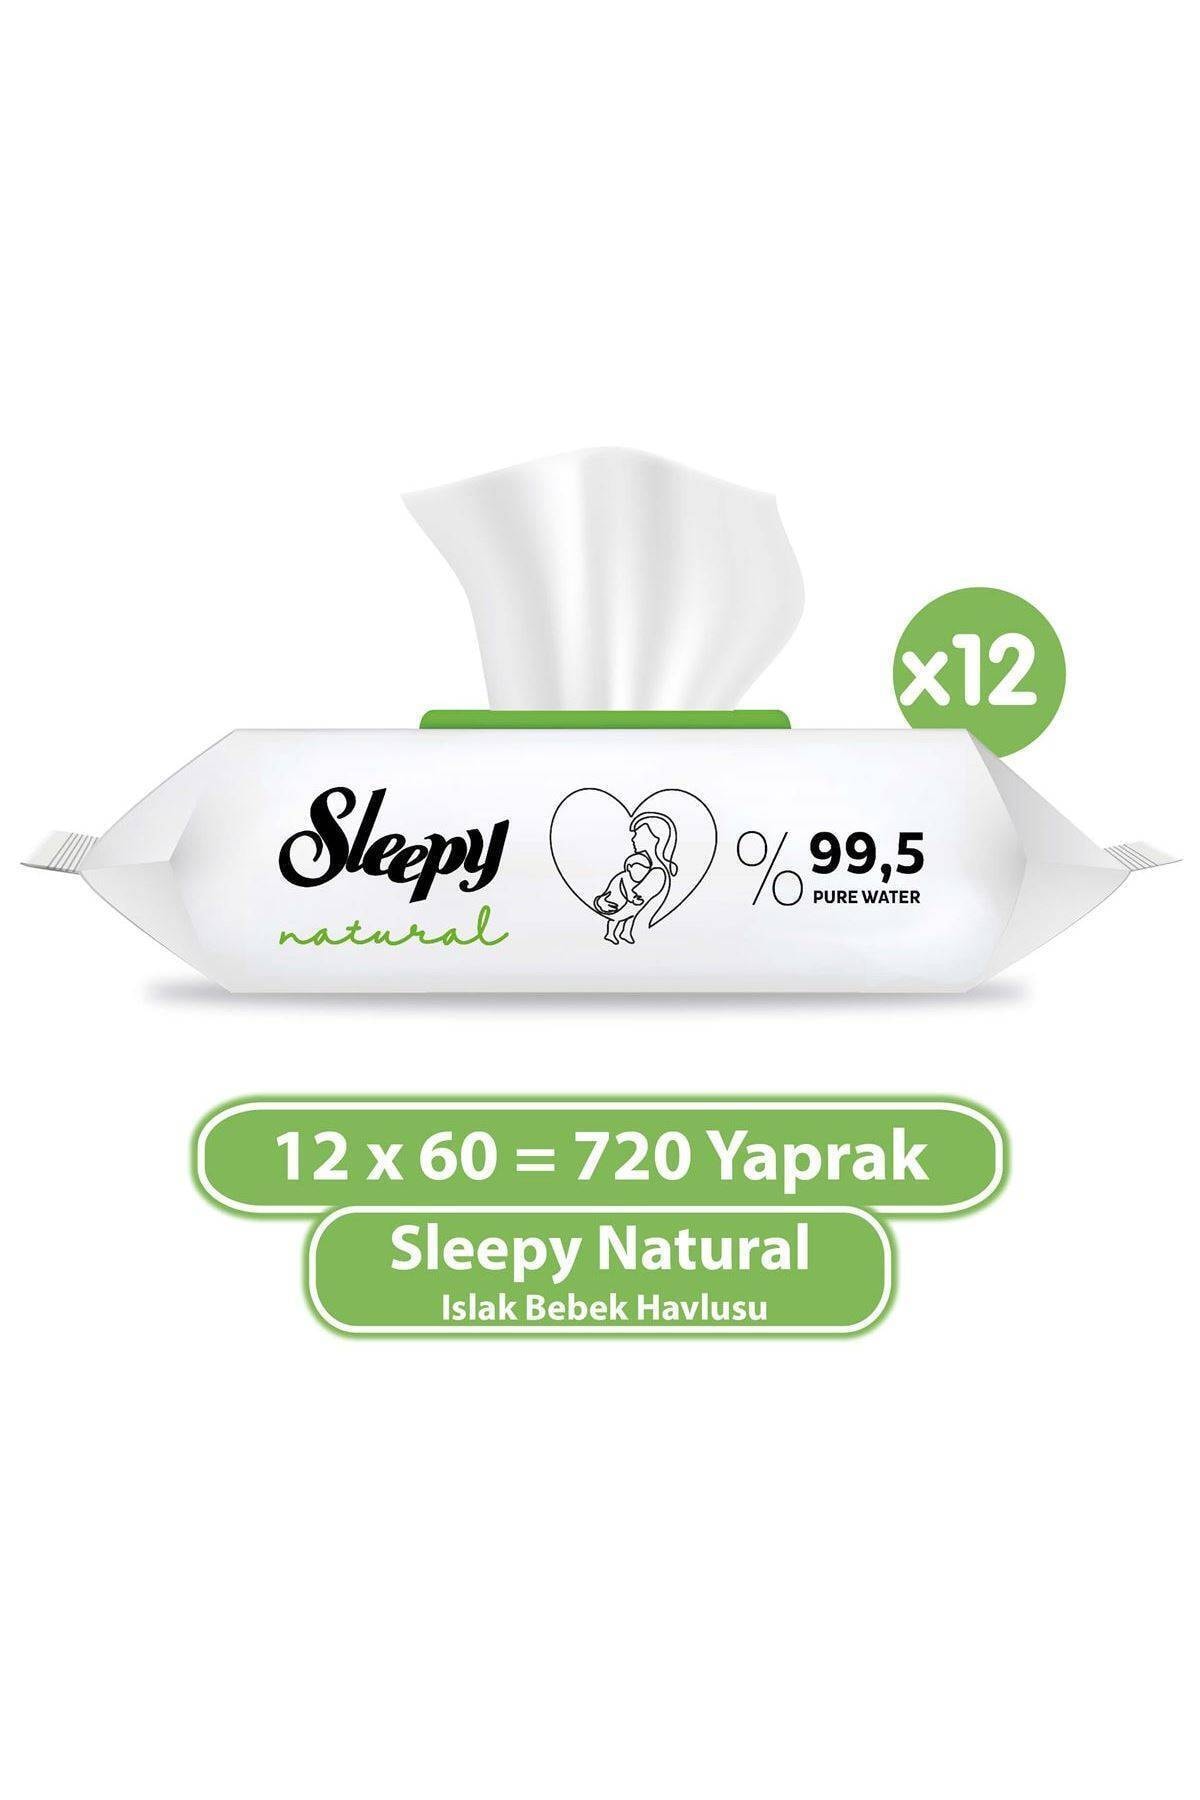 Sleepy Natural Islak Bebek Havlusu 12x60 (720 Yaprak)